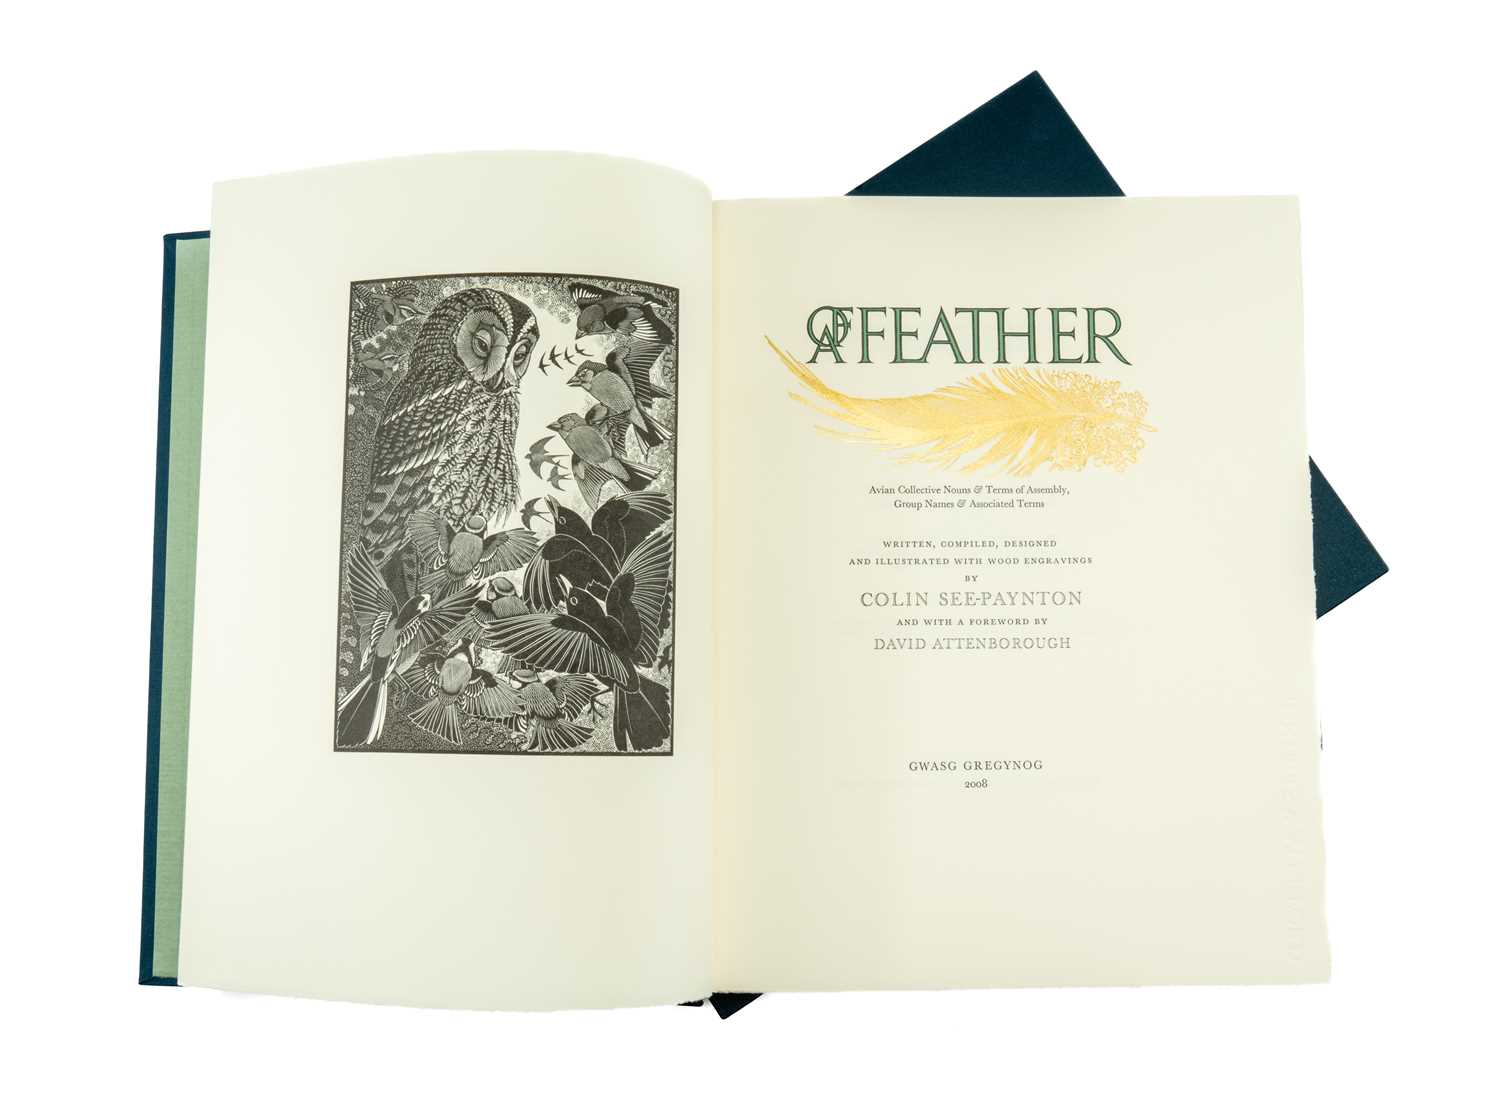 GWASG GREGYNOG PRESS: OF A FEATHER very fine 2008 folio size limited edition (5/150) 'Of a